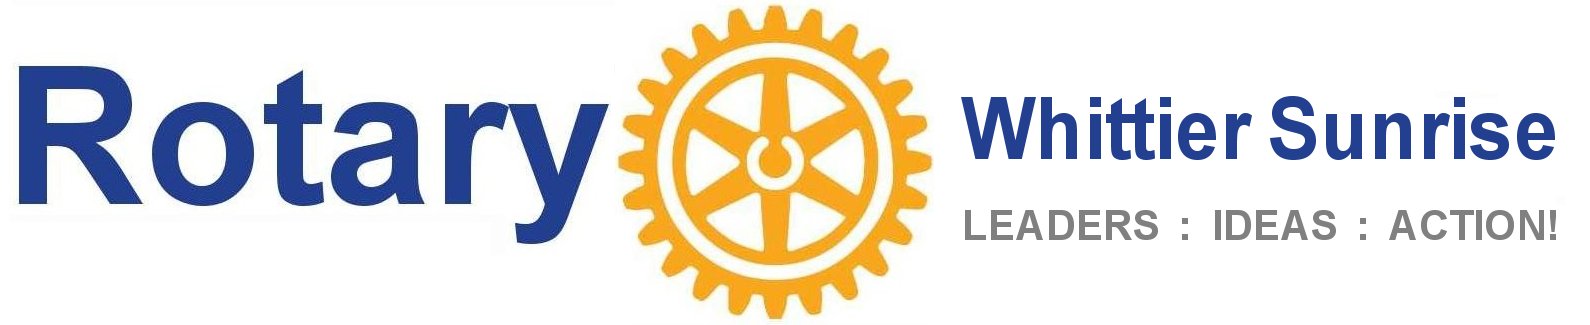 Whittier Sunrise Rotary Club                 